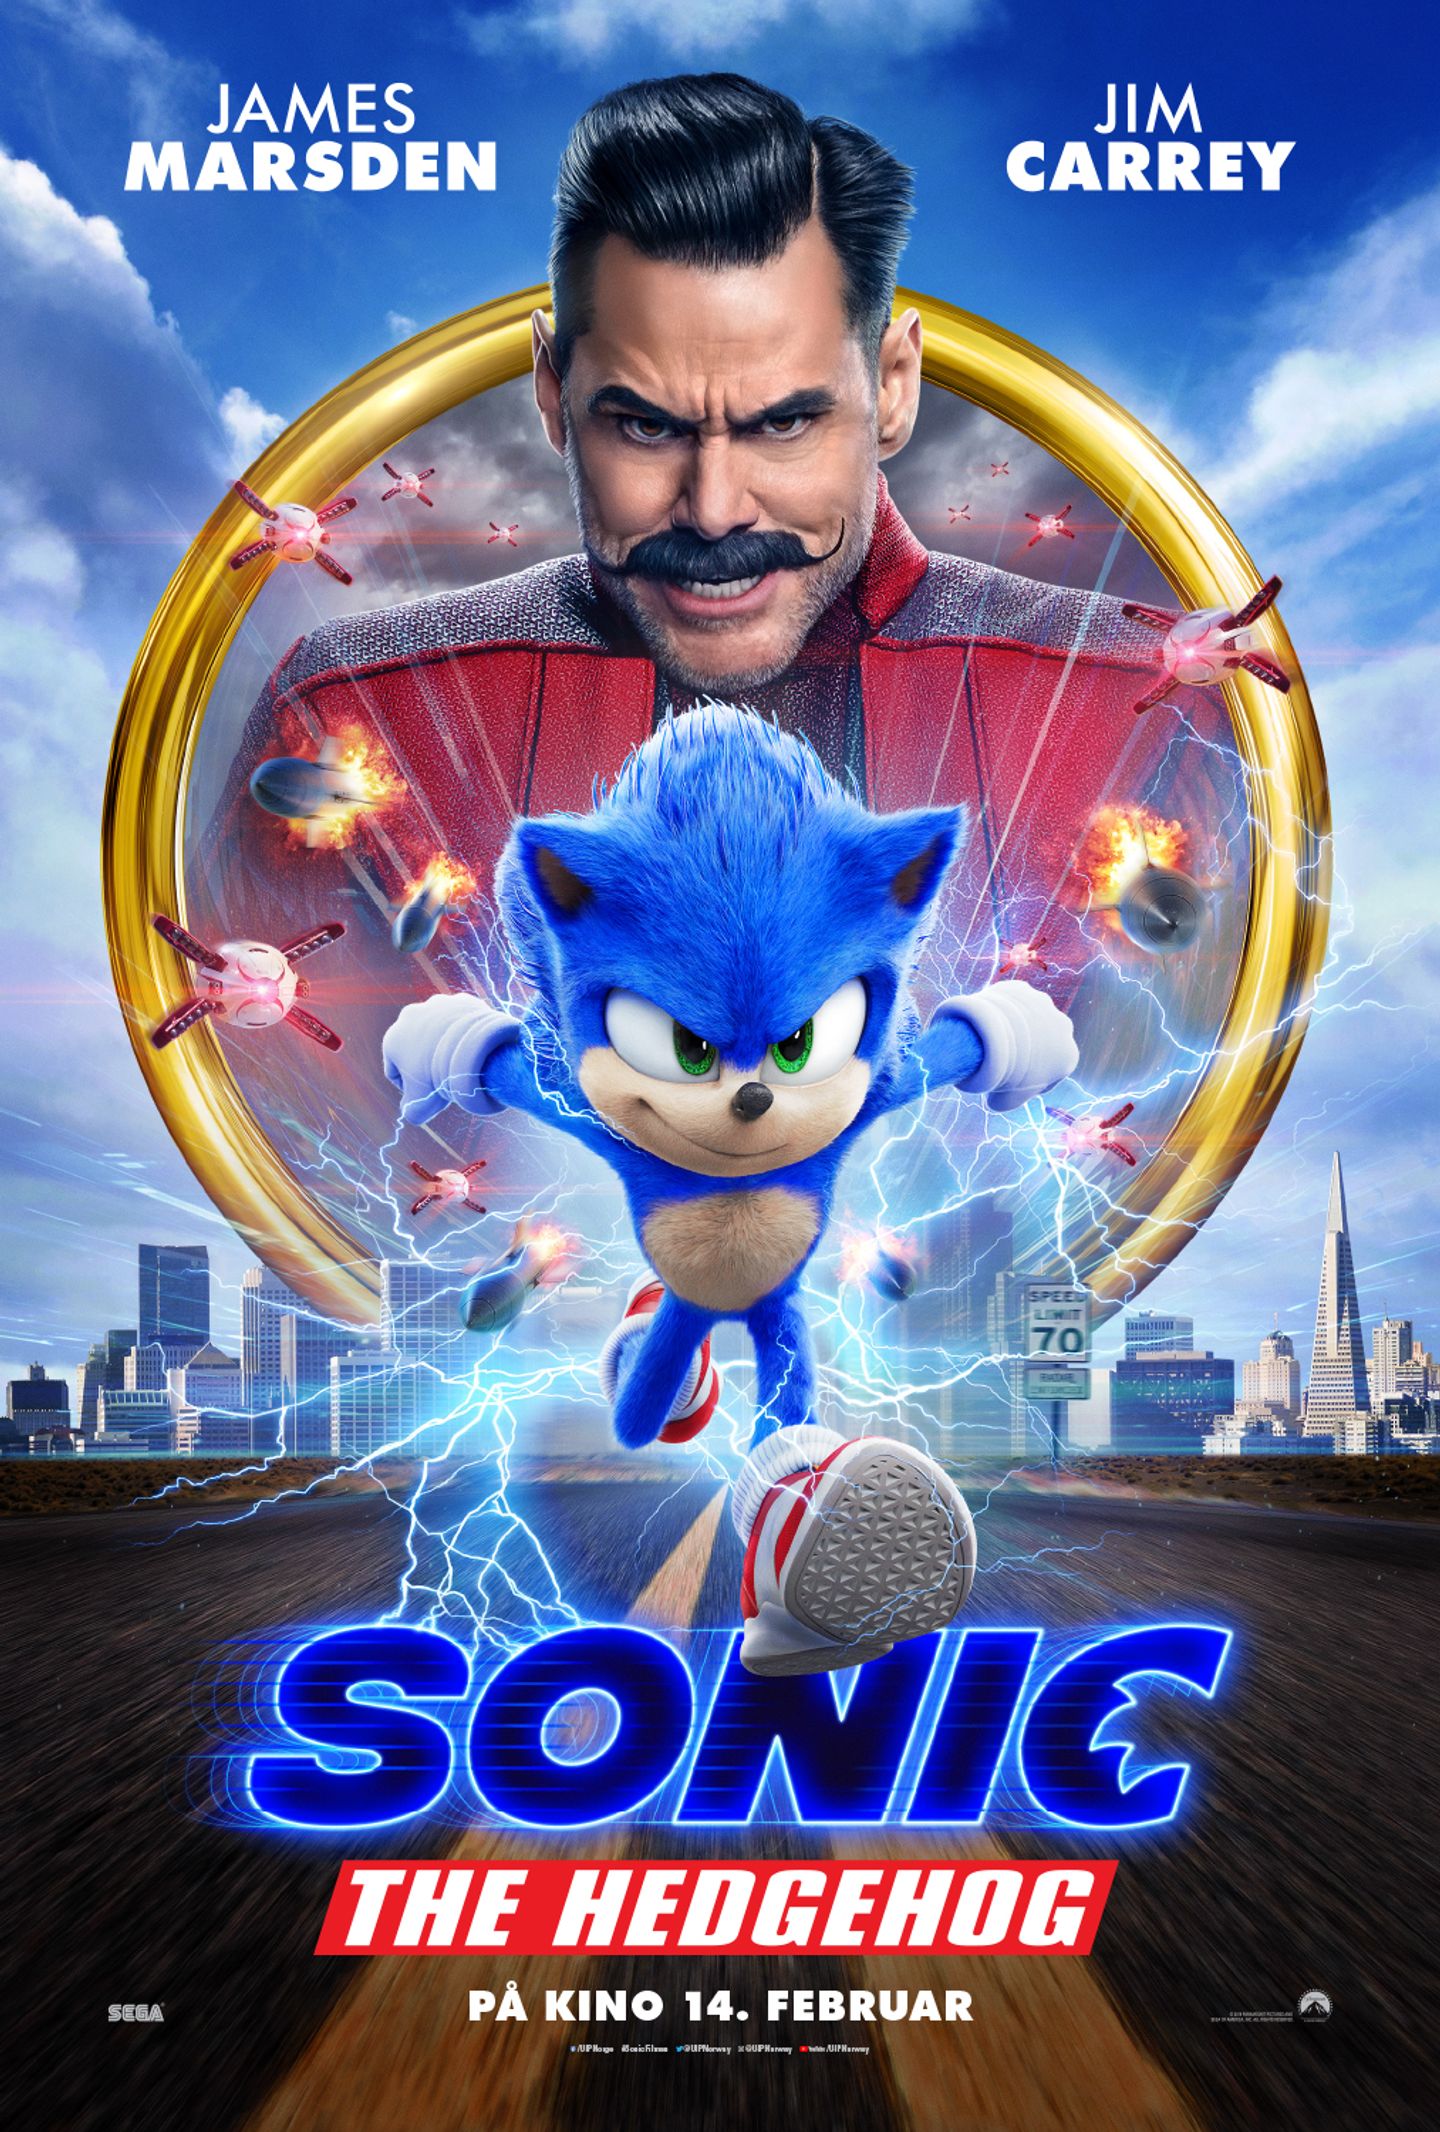 Plakat for 'Sonic The Hedgehog'